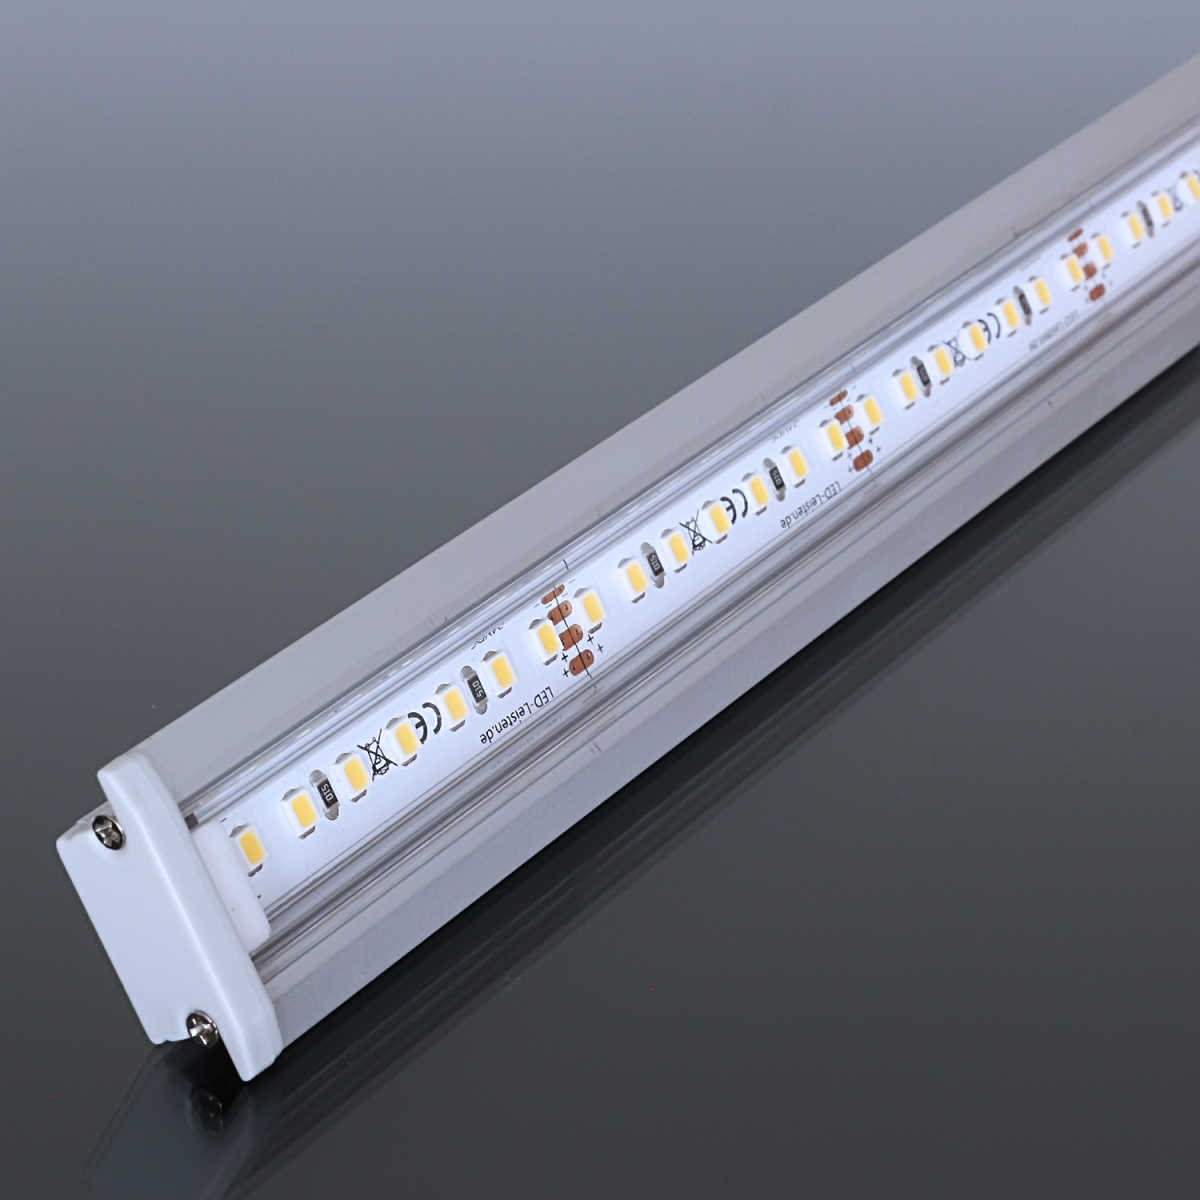 LED-Leiste Einbauprofil wasserdicht Wet-Line IP54 140x 2835 LEDs - 20  Watt - 1777 Lumen je Meter, transparent